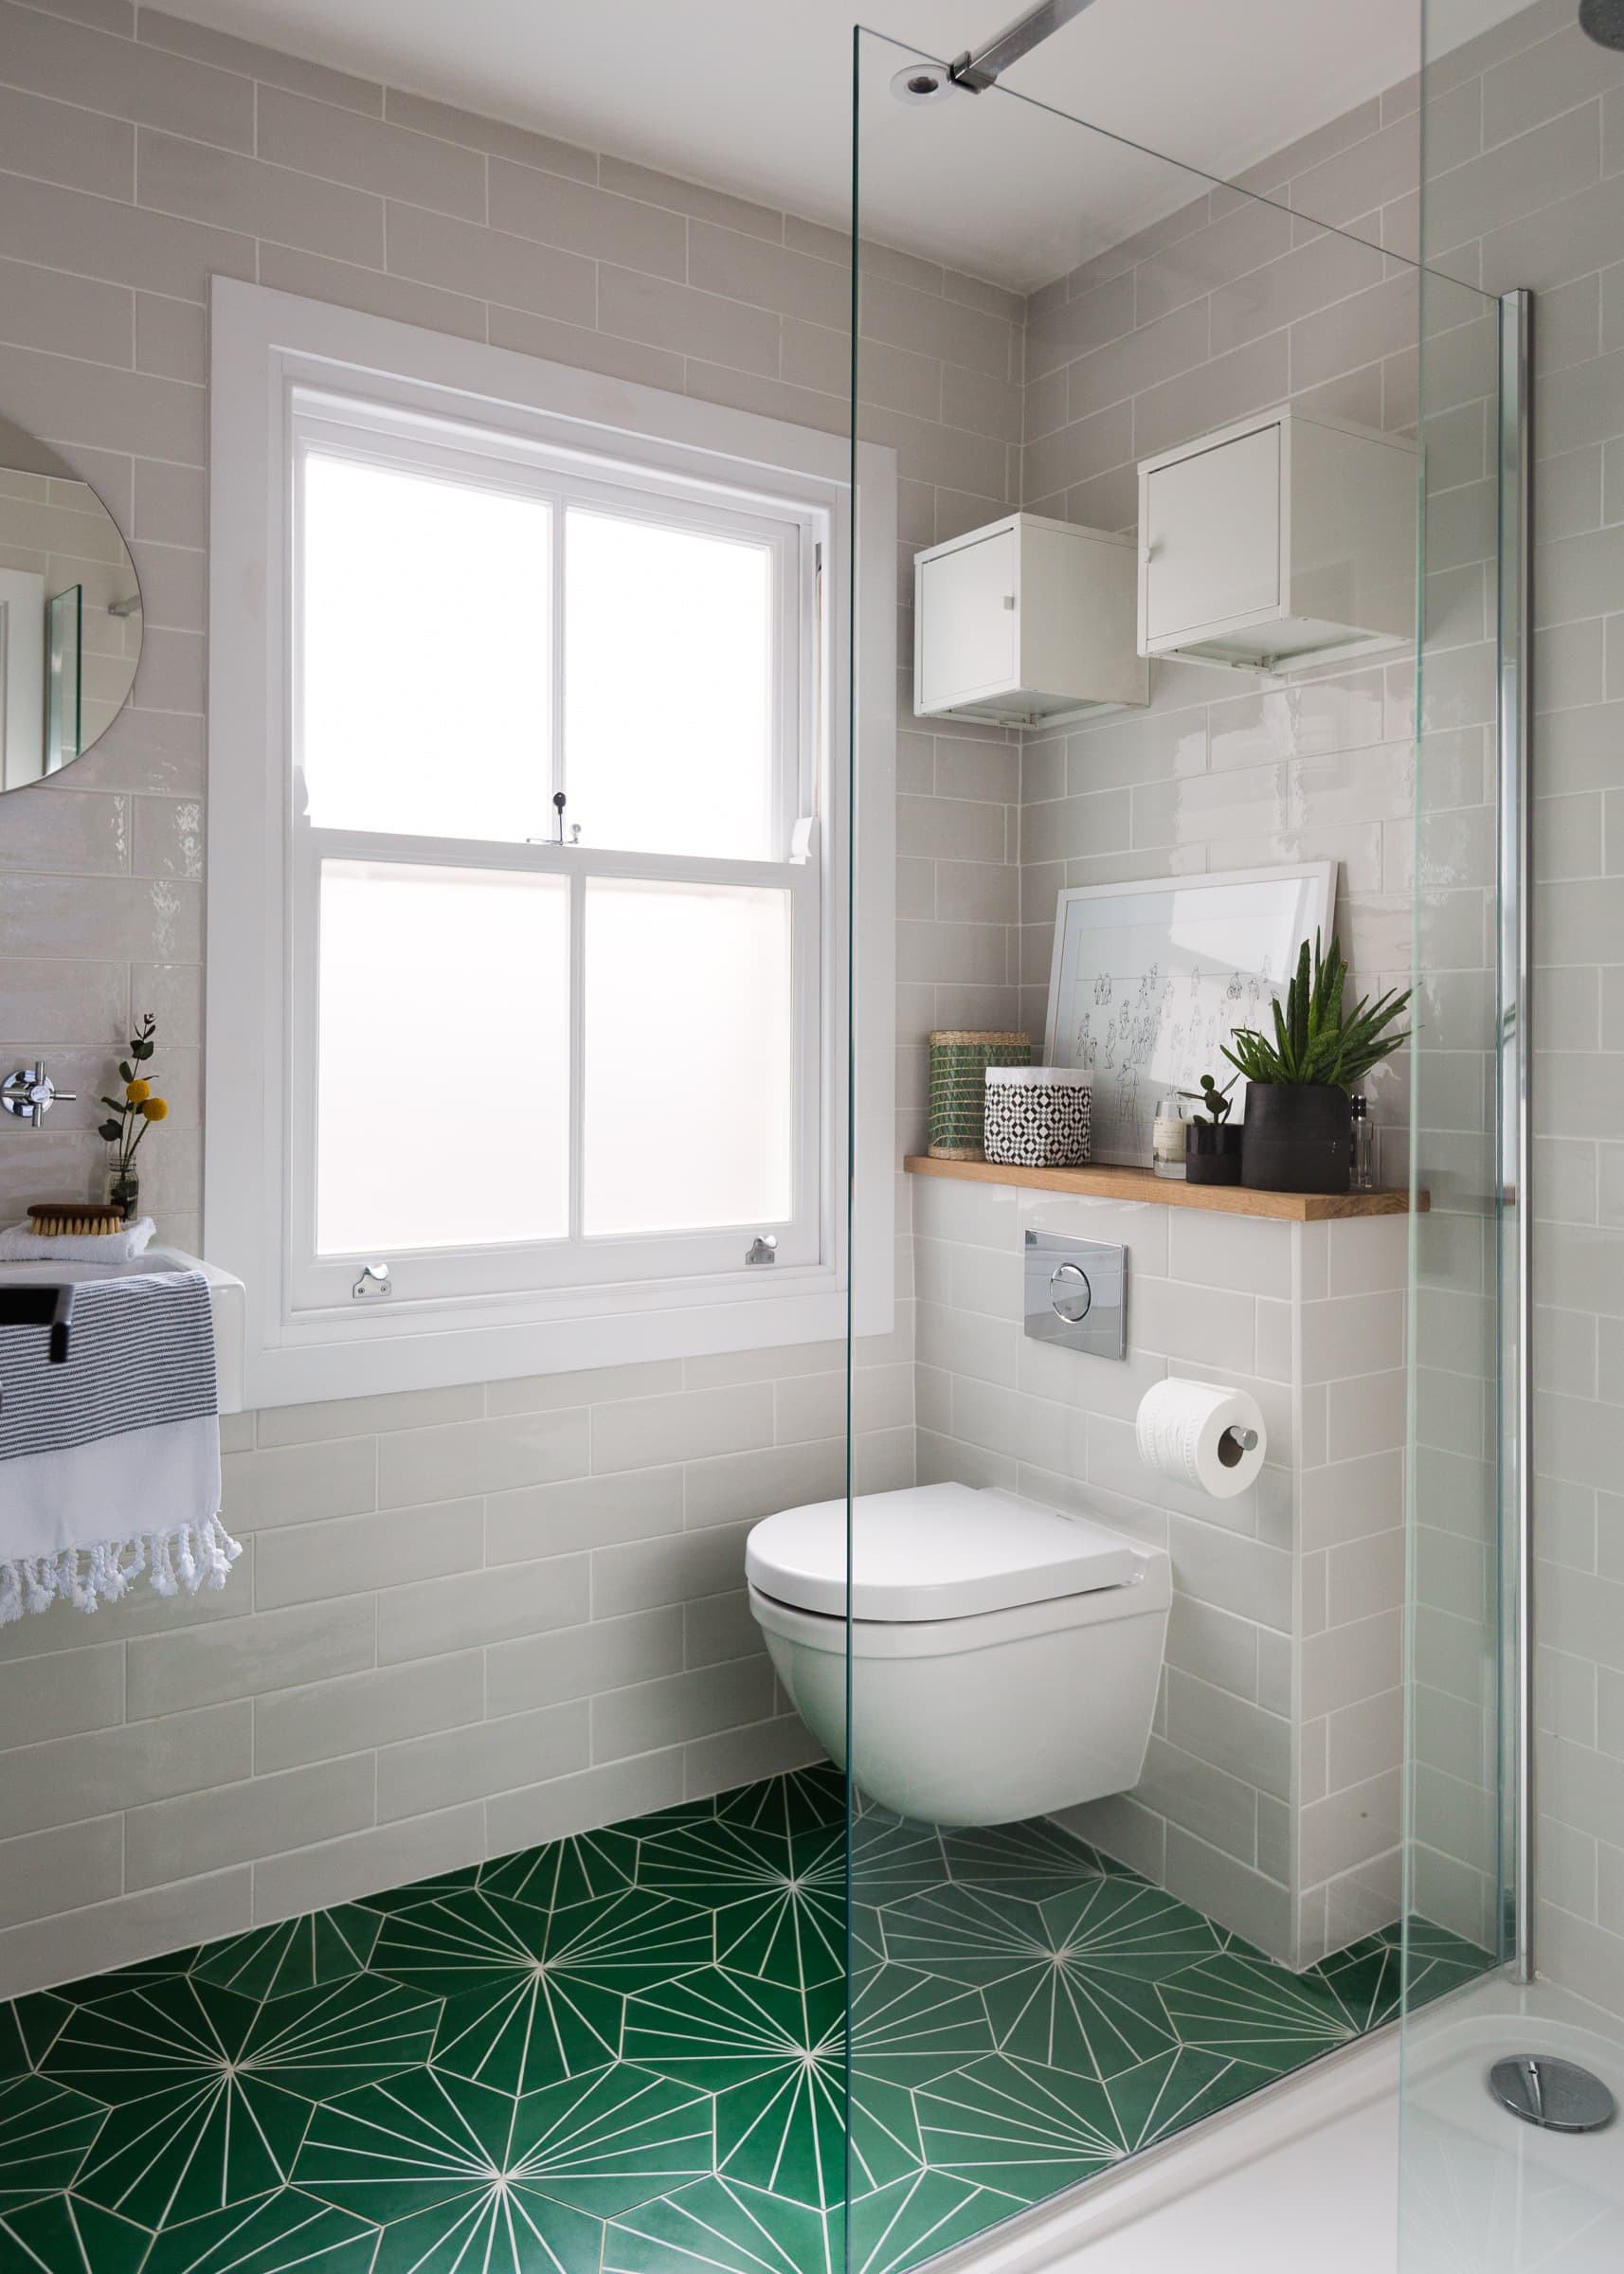 Bathroom Tile Design
 Bathroom Tile Ideas Floor Shower Wall Designs